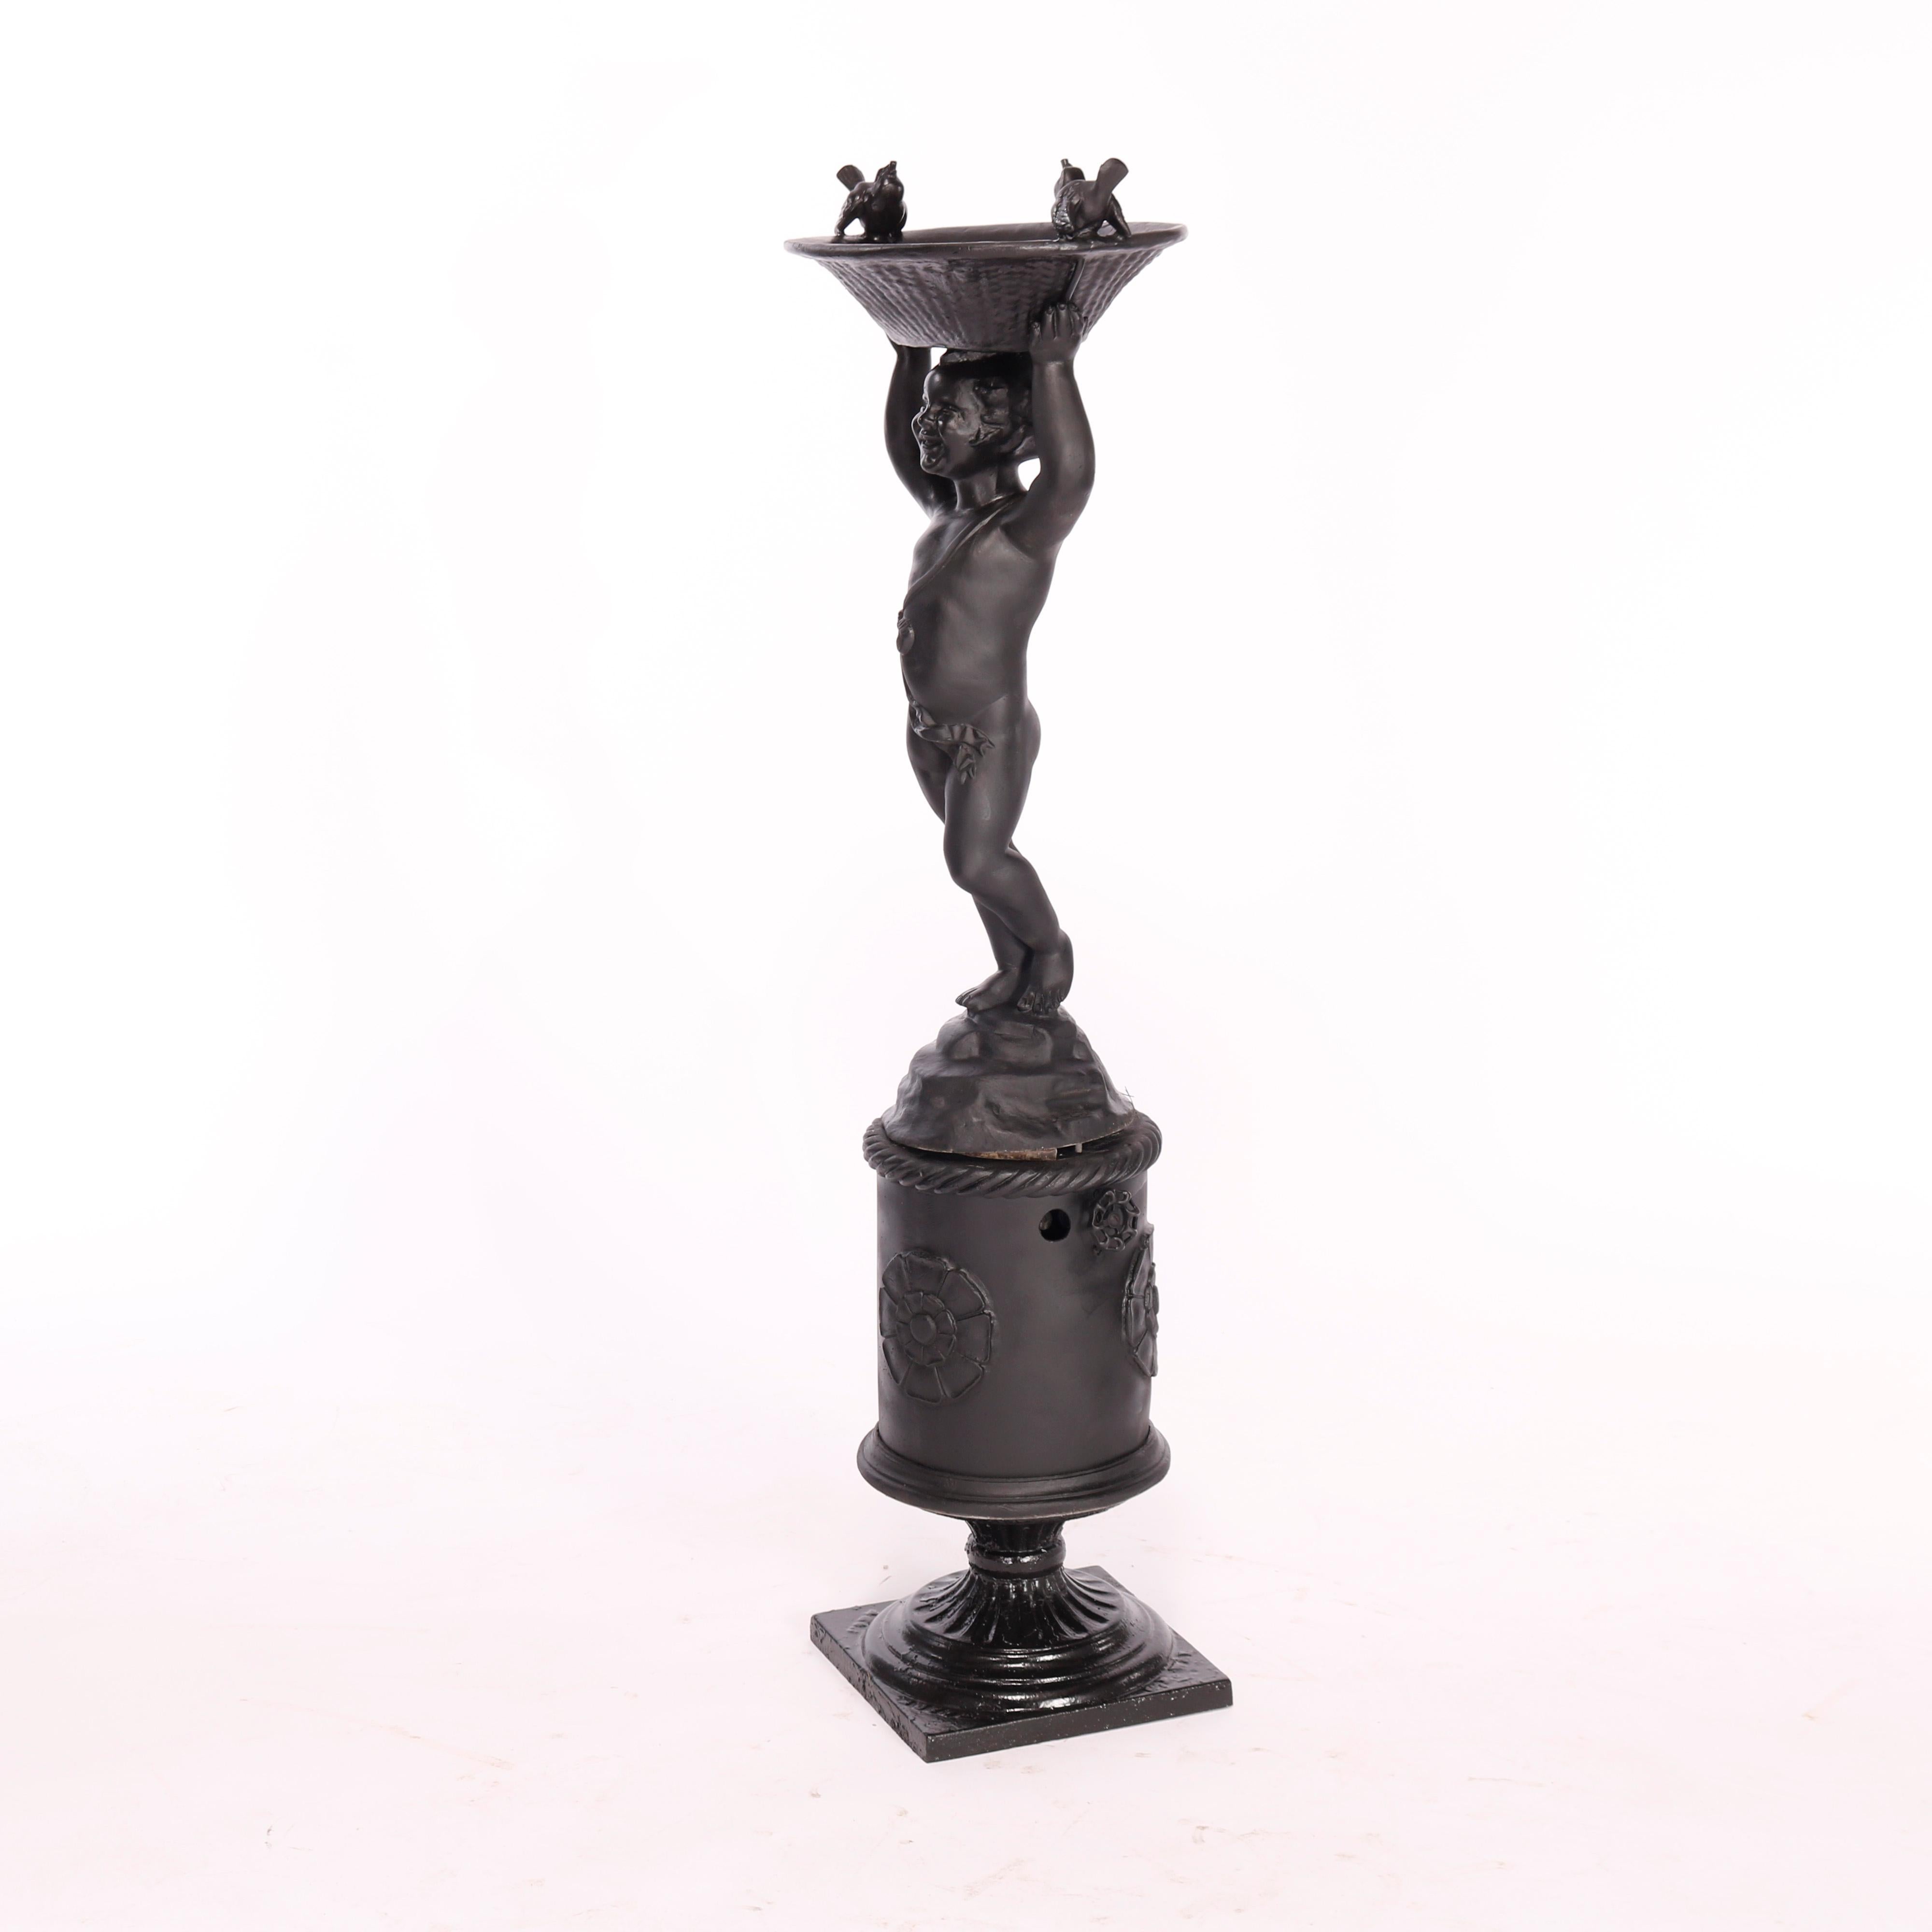 20th Century Figural Cast Iron Cherub Classical Garden Fountain or Planter 20th C